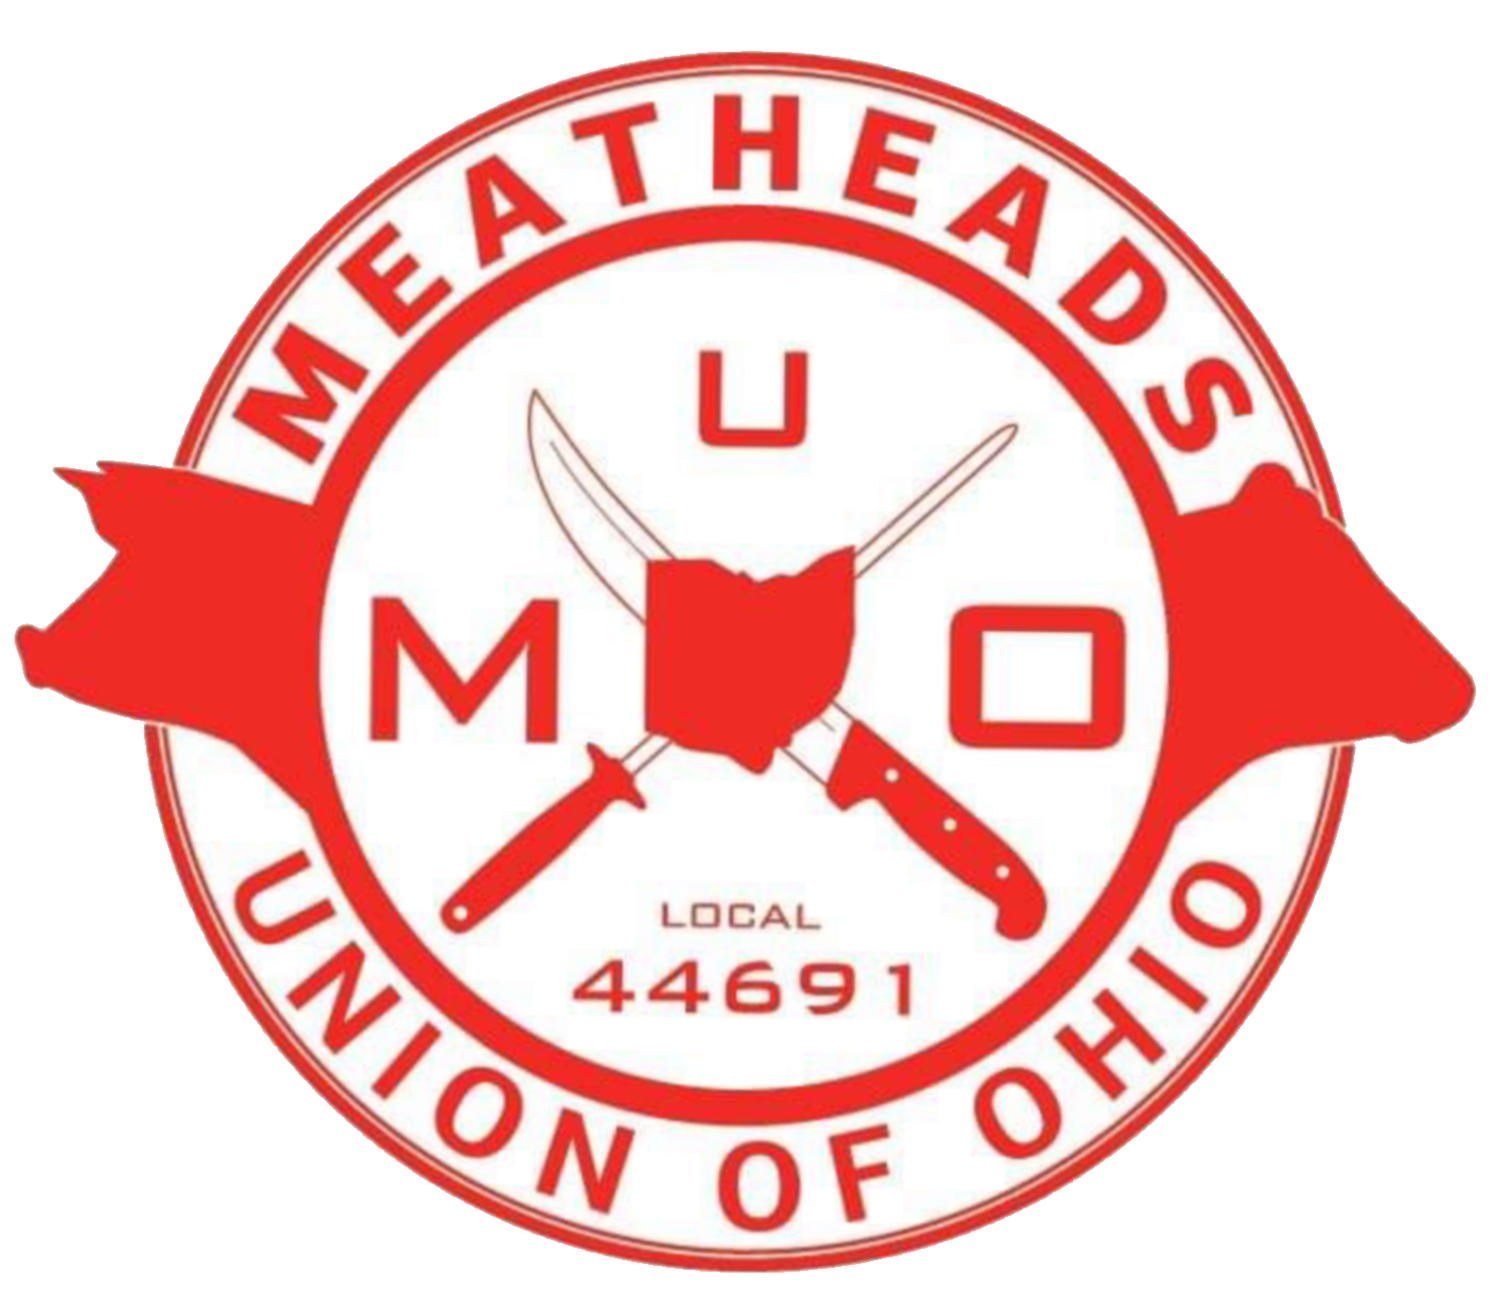 Meatheads Union Tavern